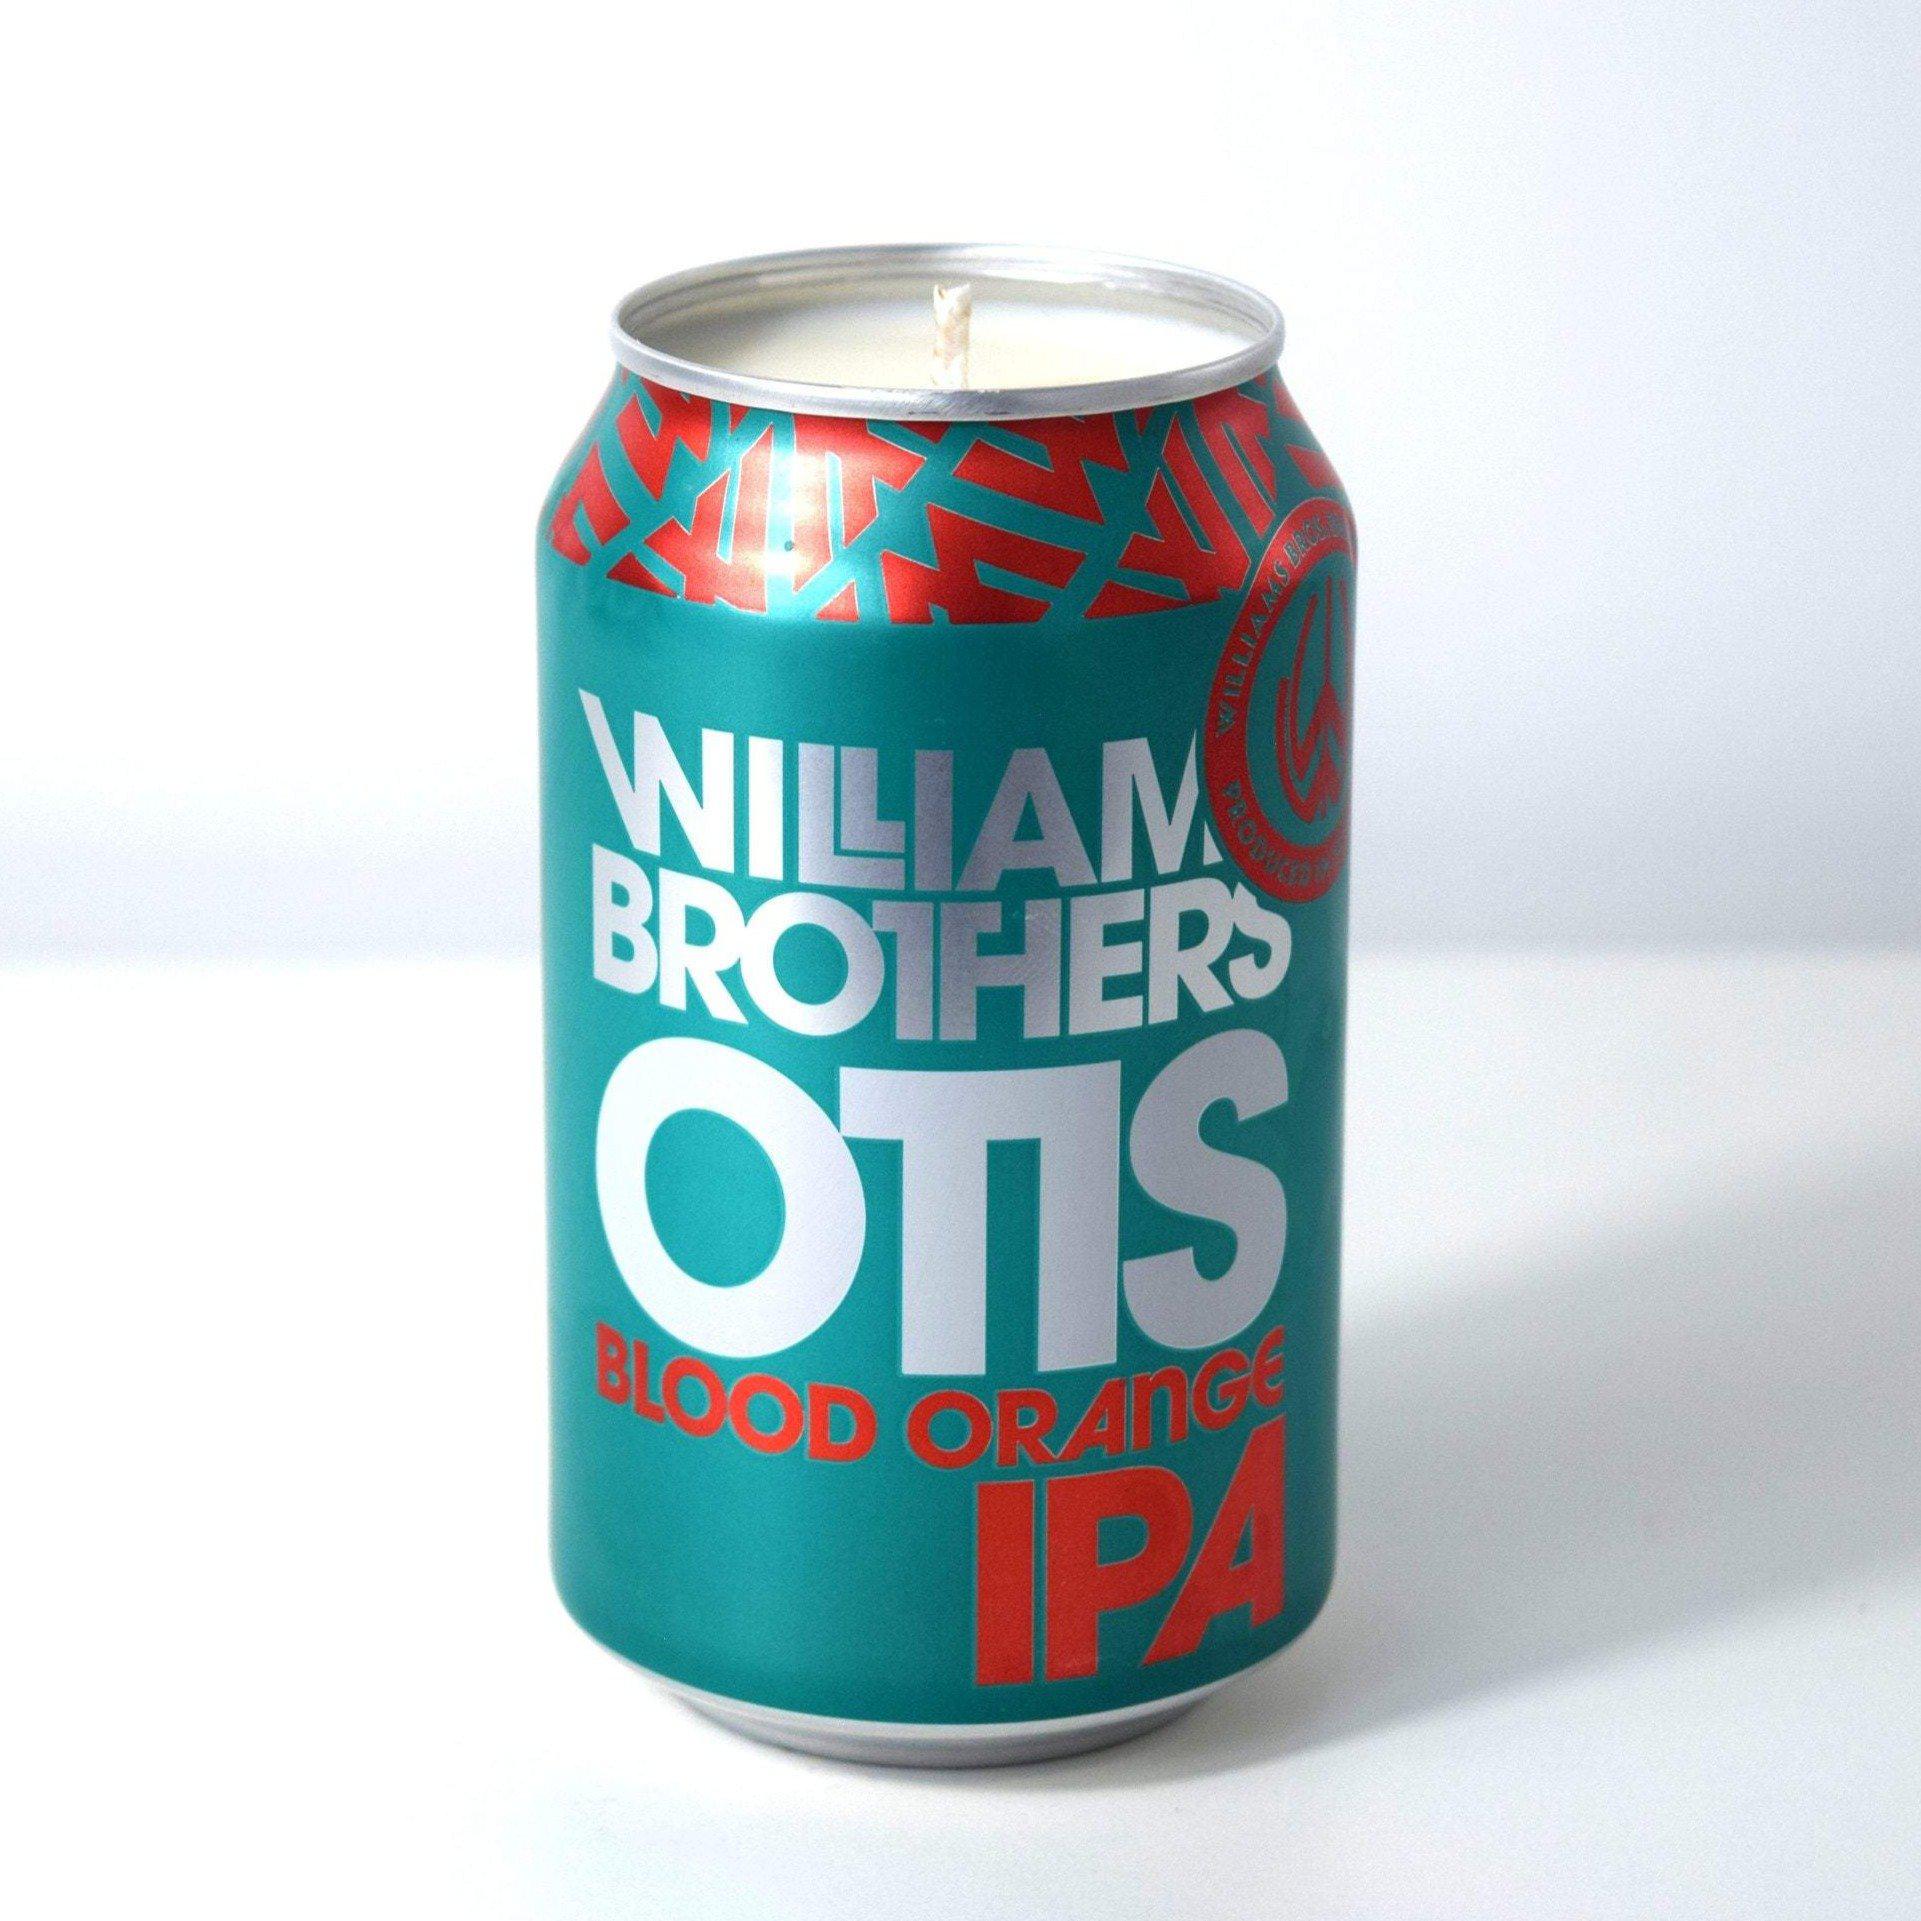 Williams Brothers Otis Blood Orange IPA Beer Can Candle-Beer Can Candles-Adhock Homeware